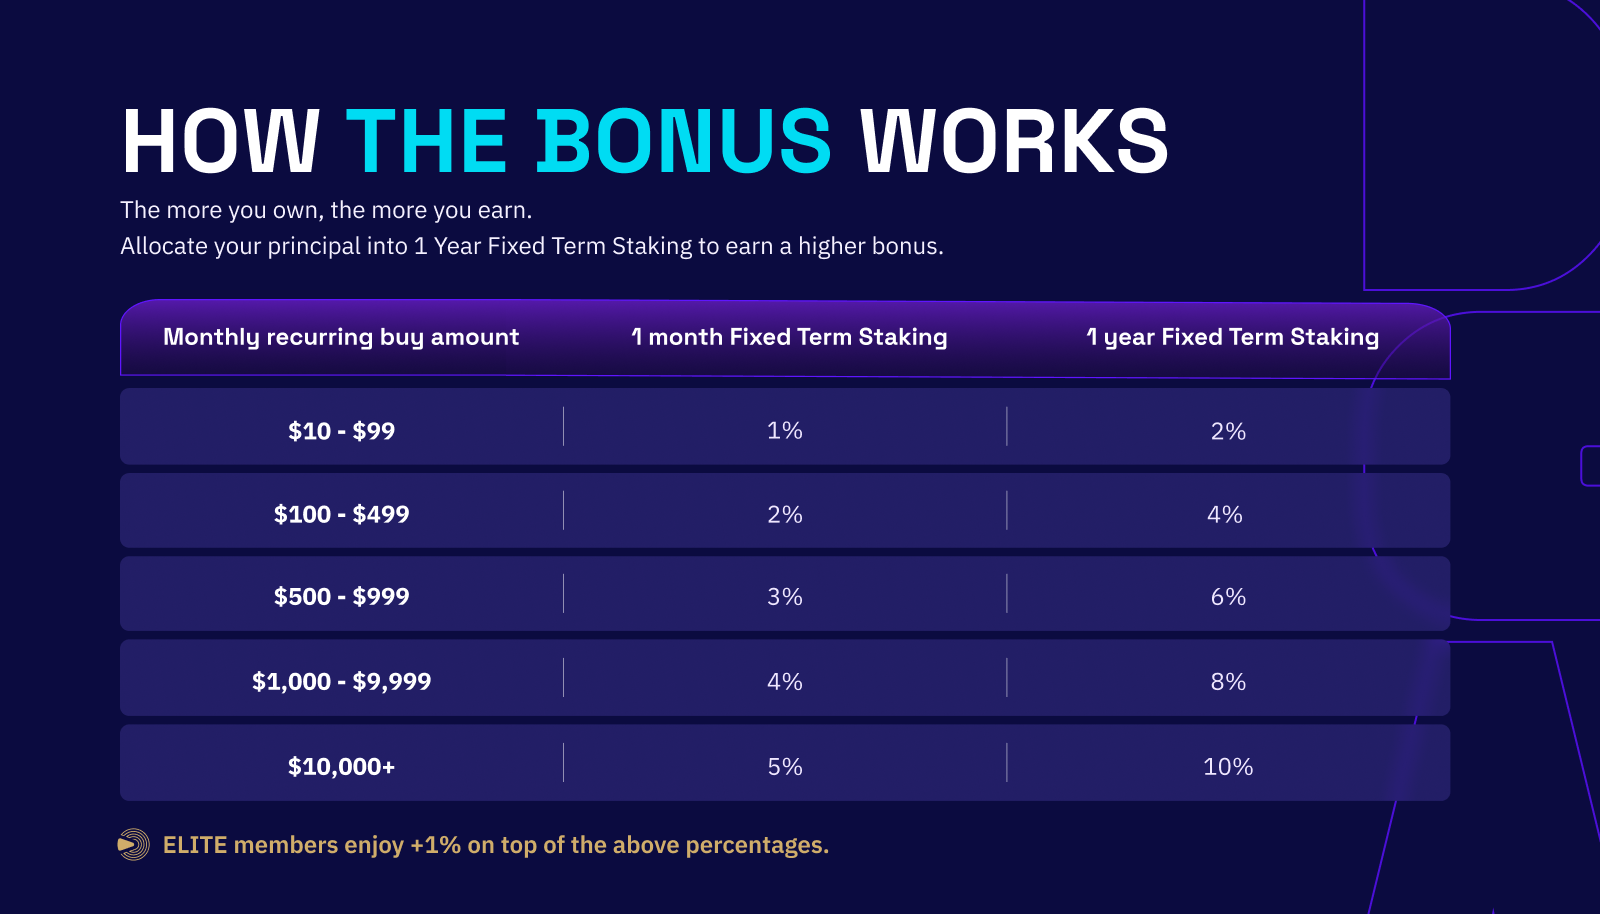 How the 11% bonus works